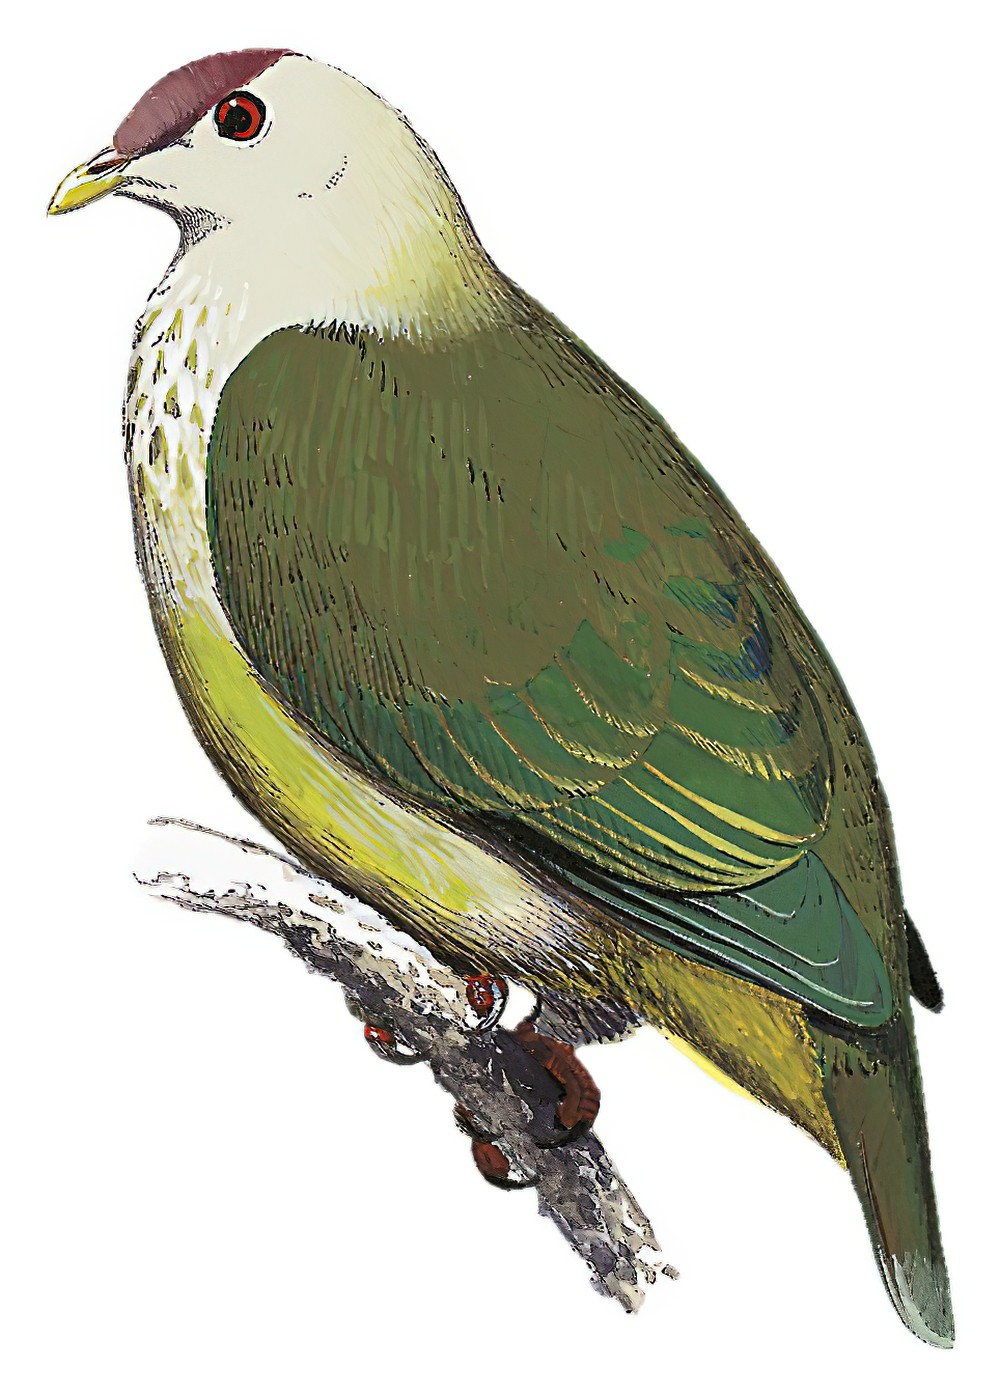 Makatea Fruit-Dove / Ptilinopus chalcurus